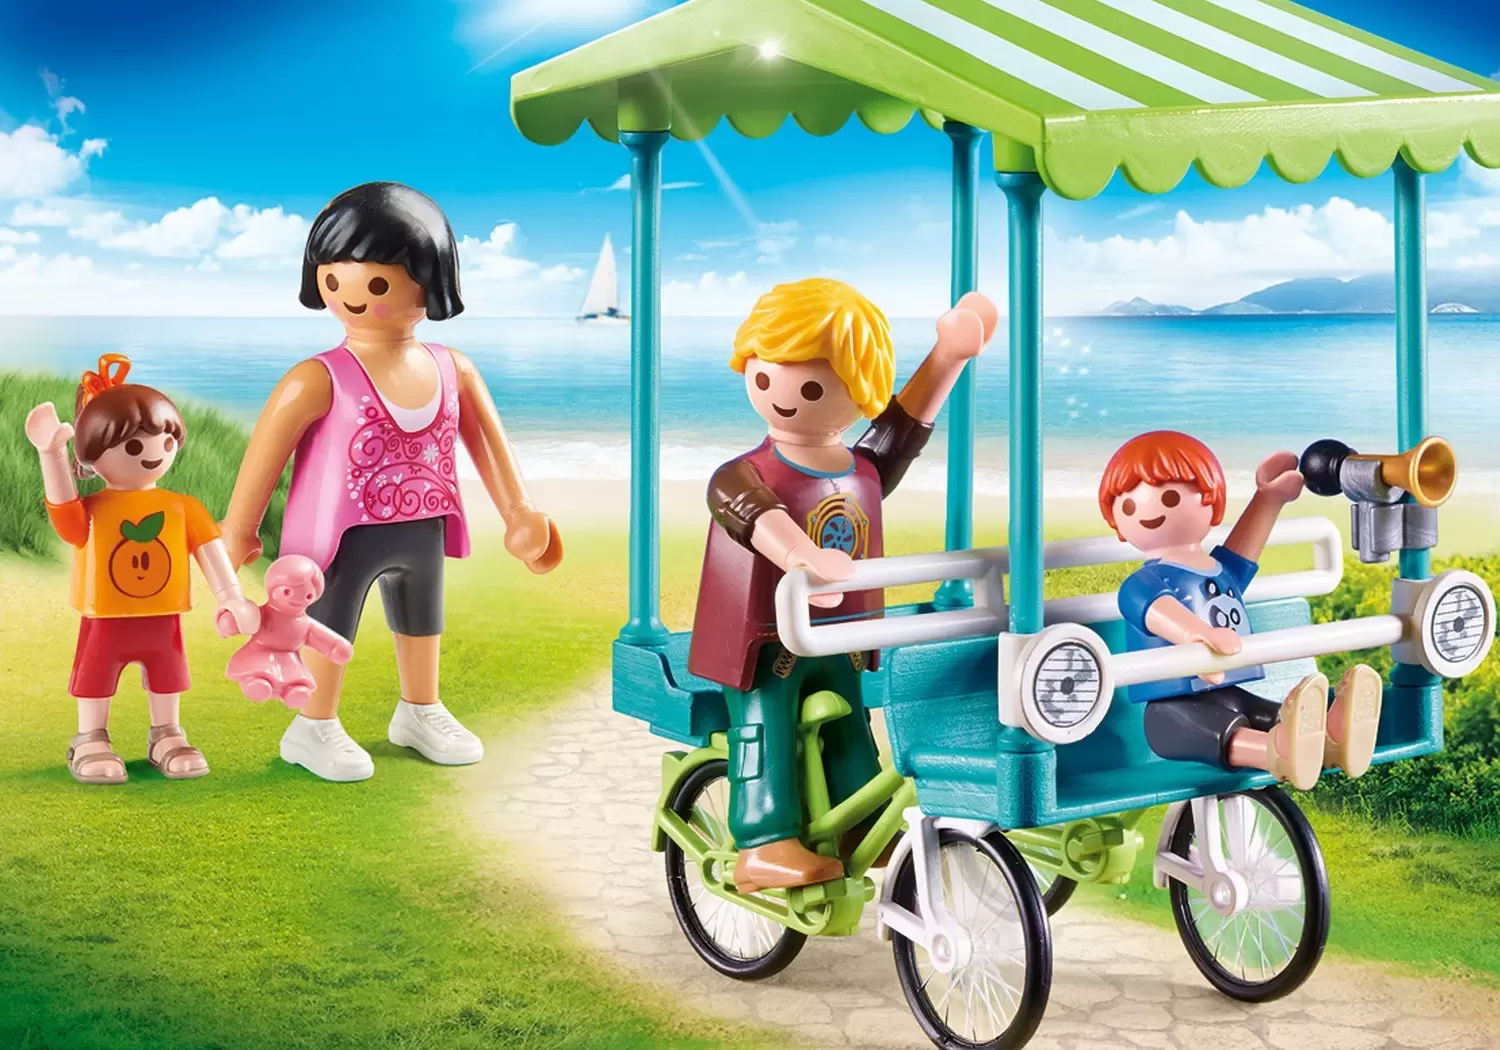 Playmobil en vacances - Sortie familiale en vélo